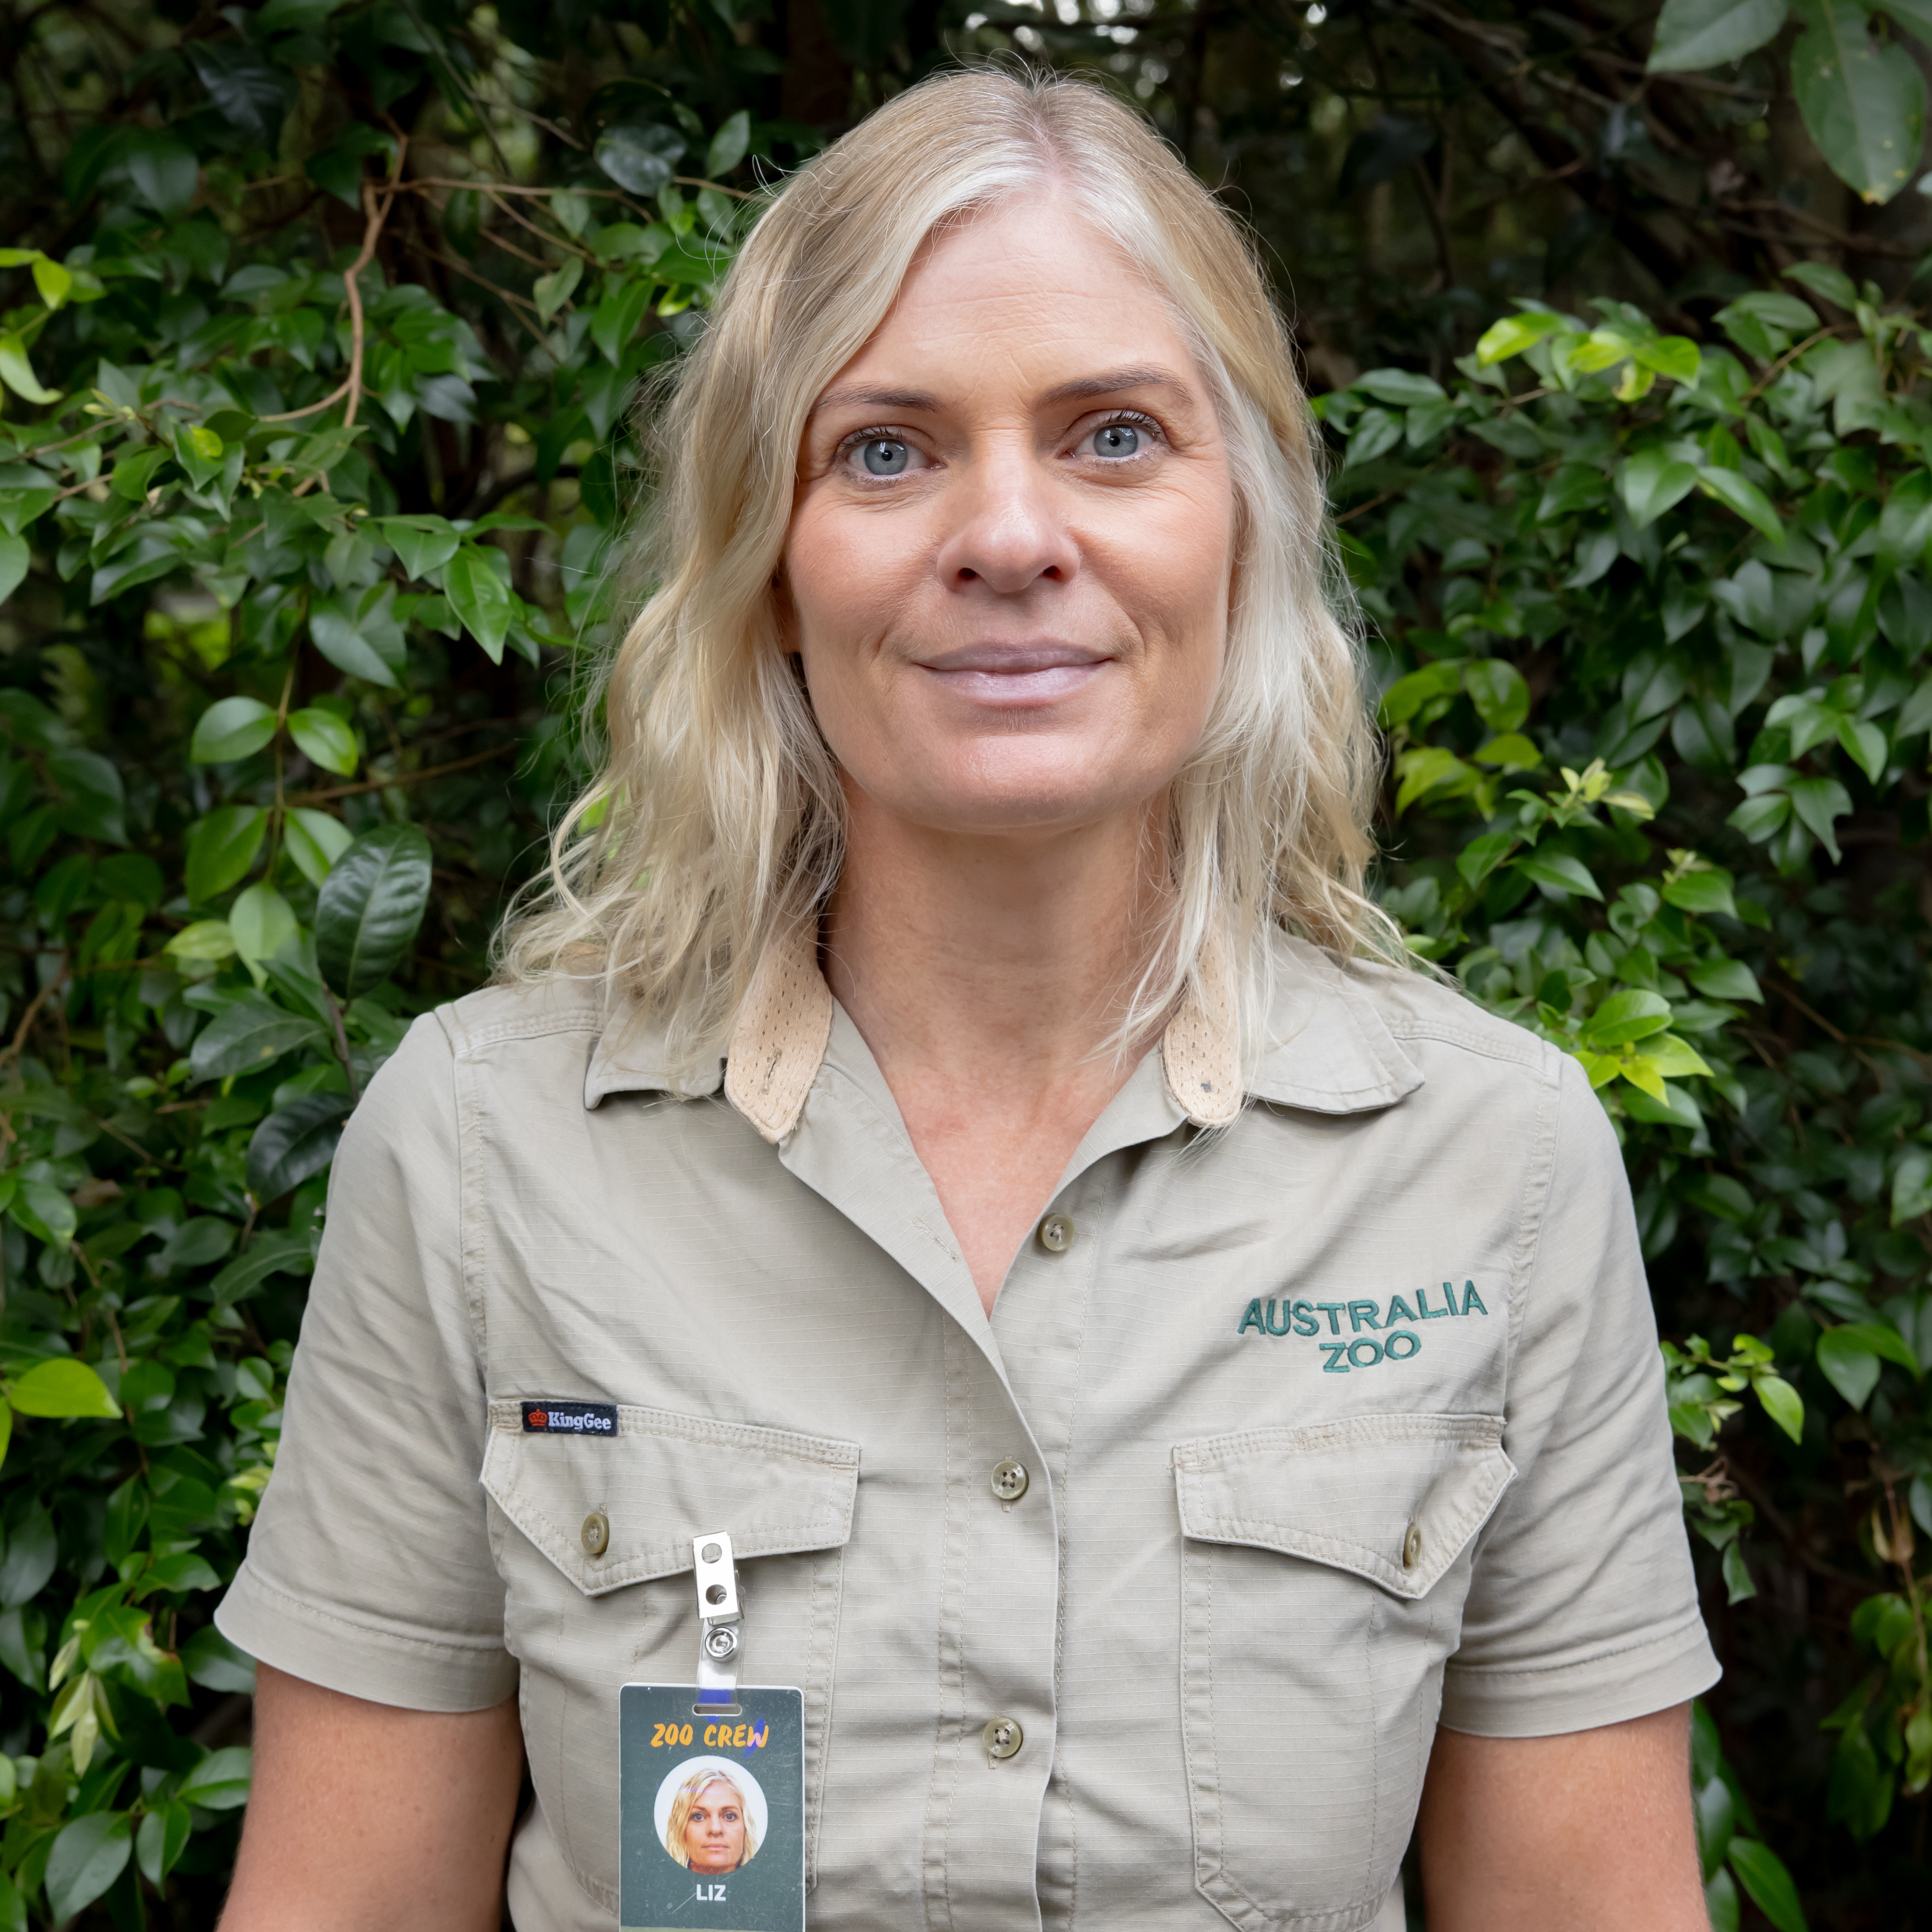 Payroll officer, Australia Zoo - Liz Taylor